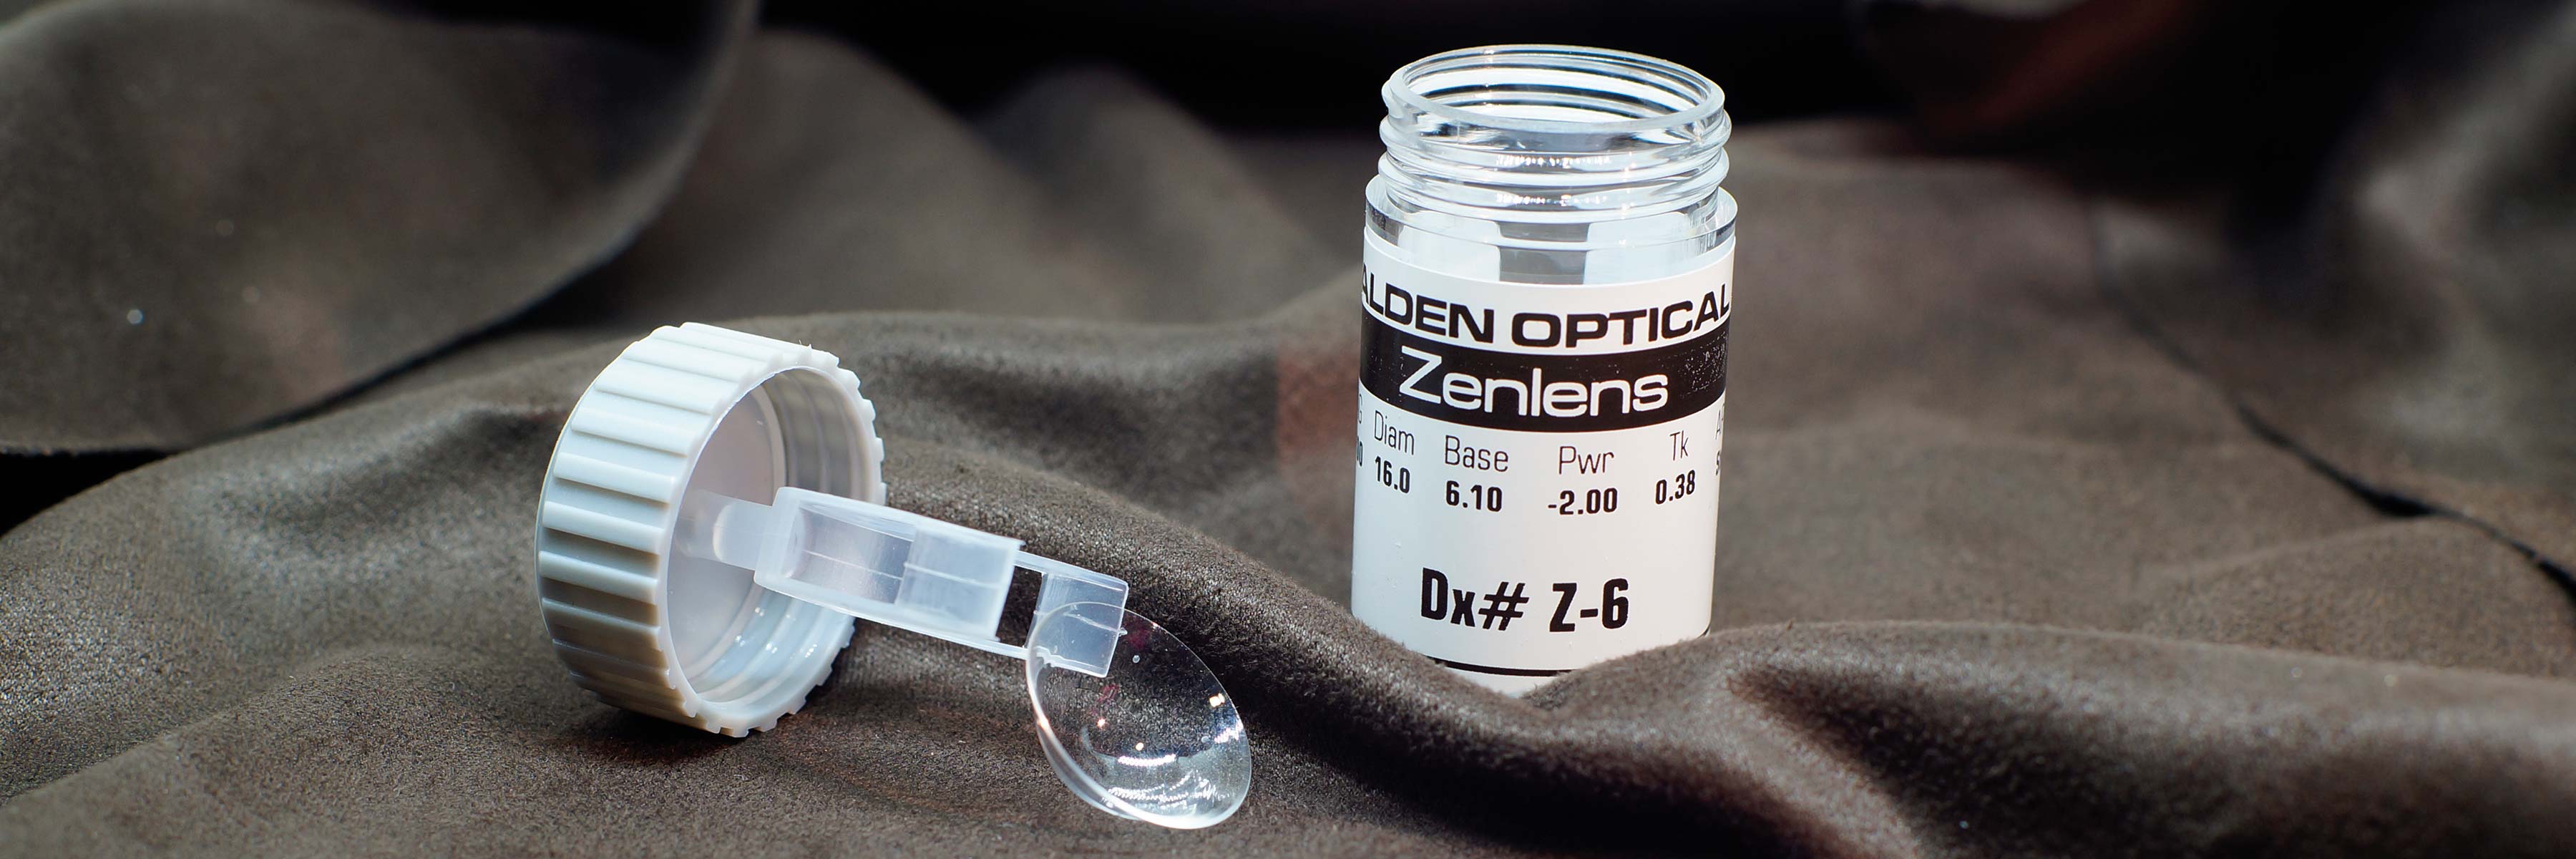 OrthoK Contact Lenses Hodd Tam Optometry